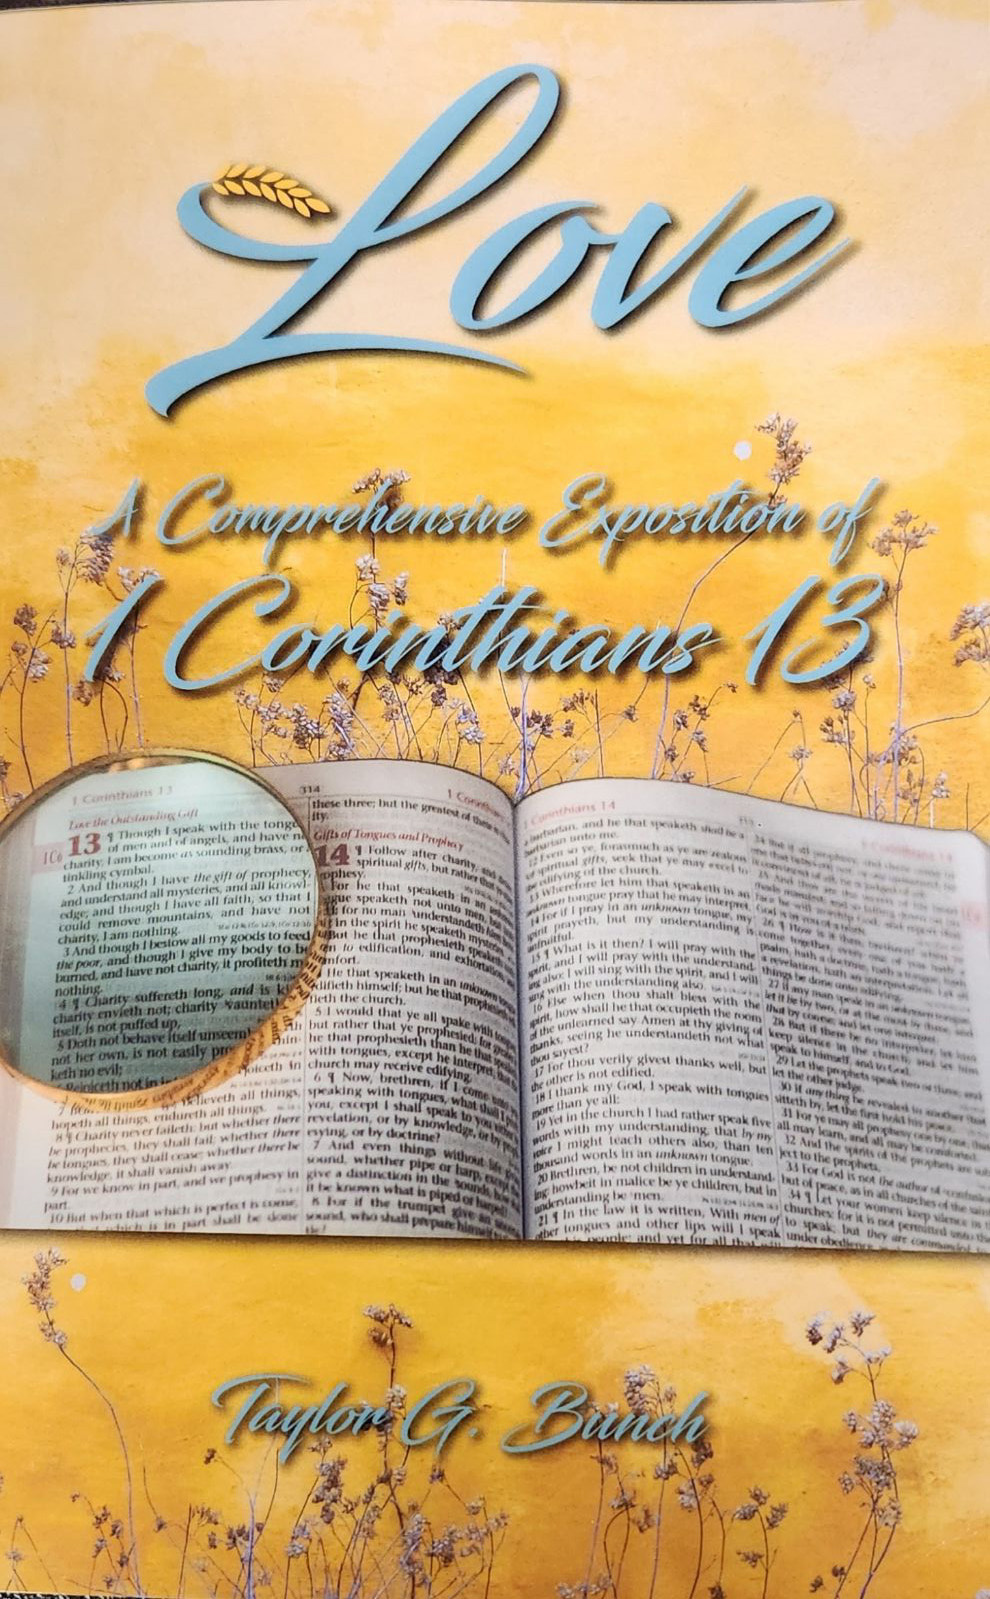 LOVE: A Comprehensive Exposition of 1 Corinthians 13